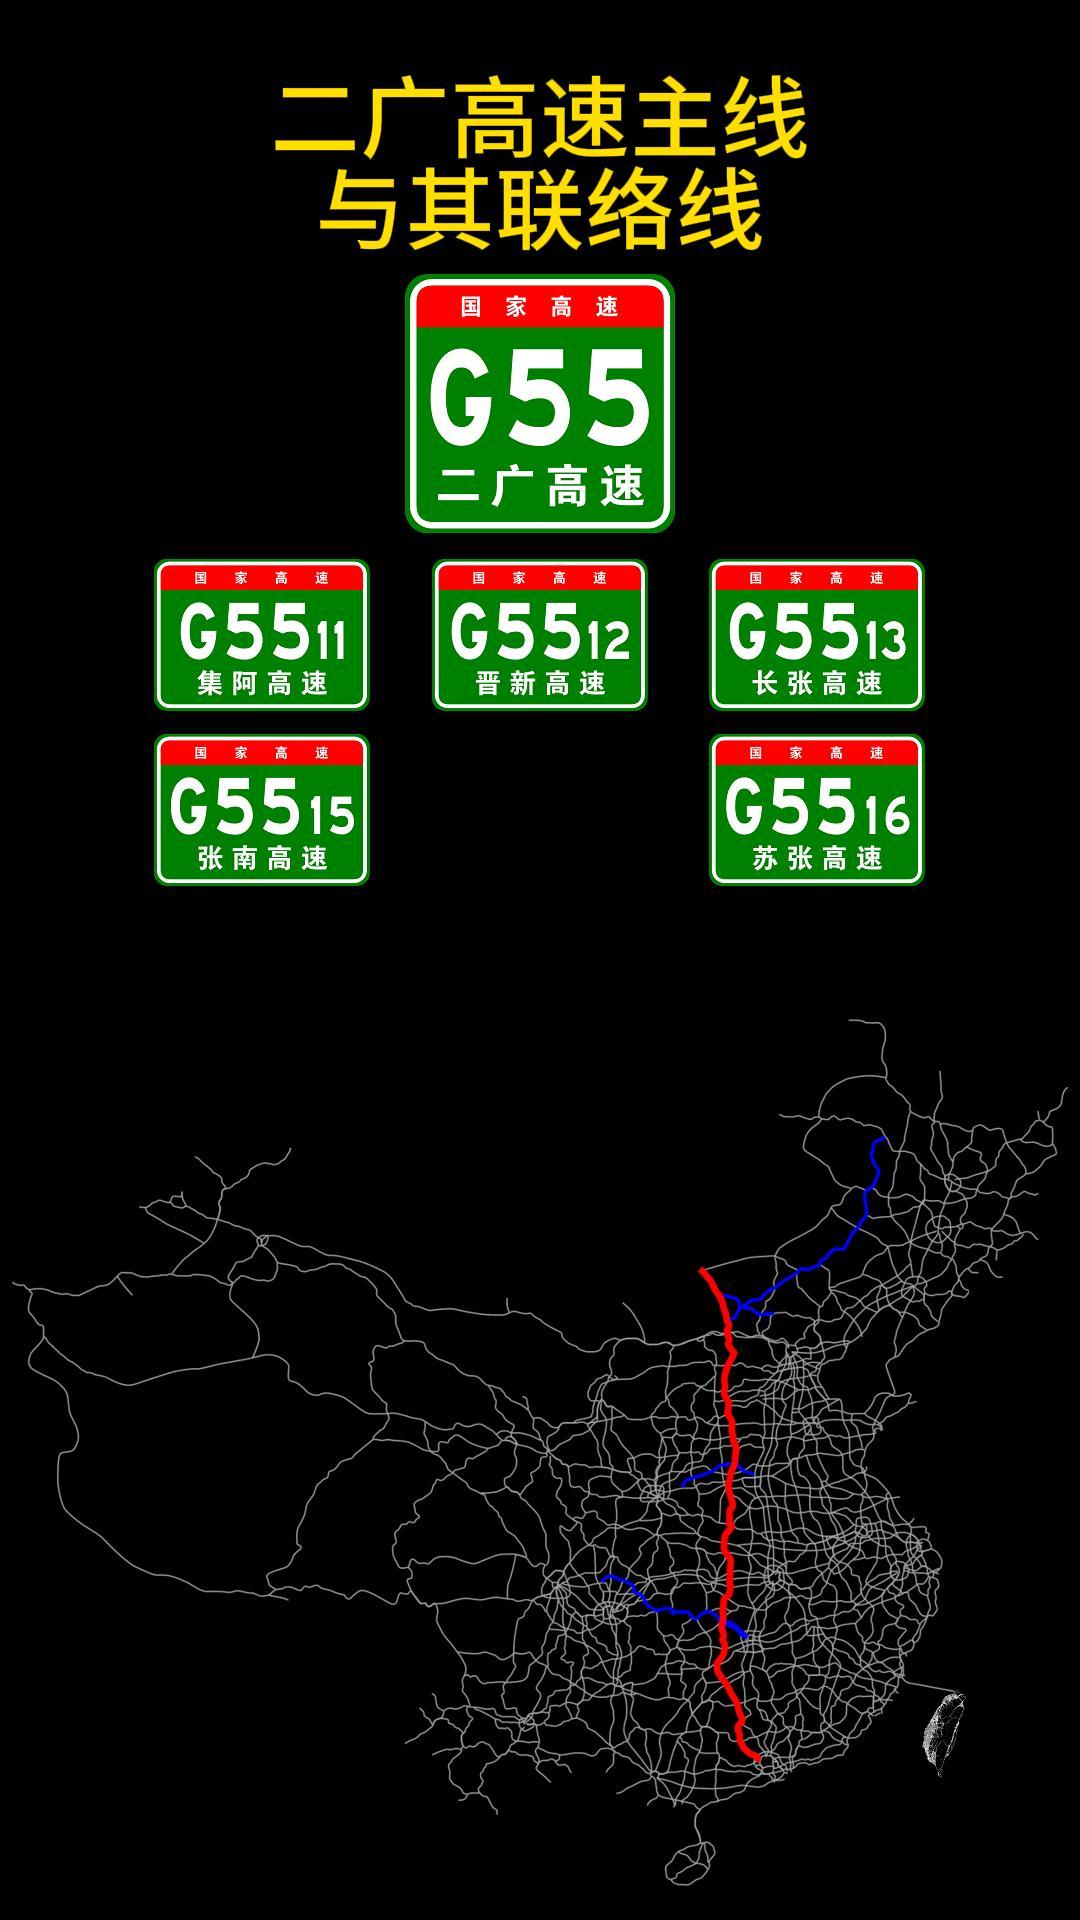 G55二广高速主线与其联络线